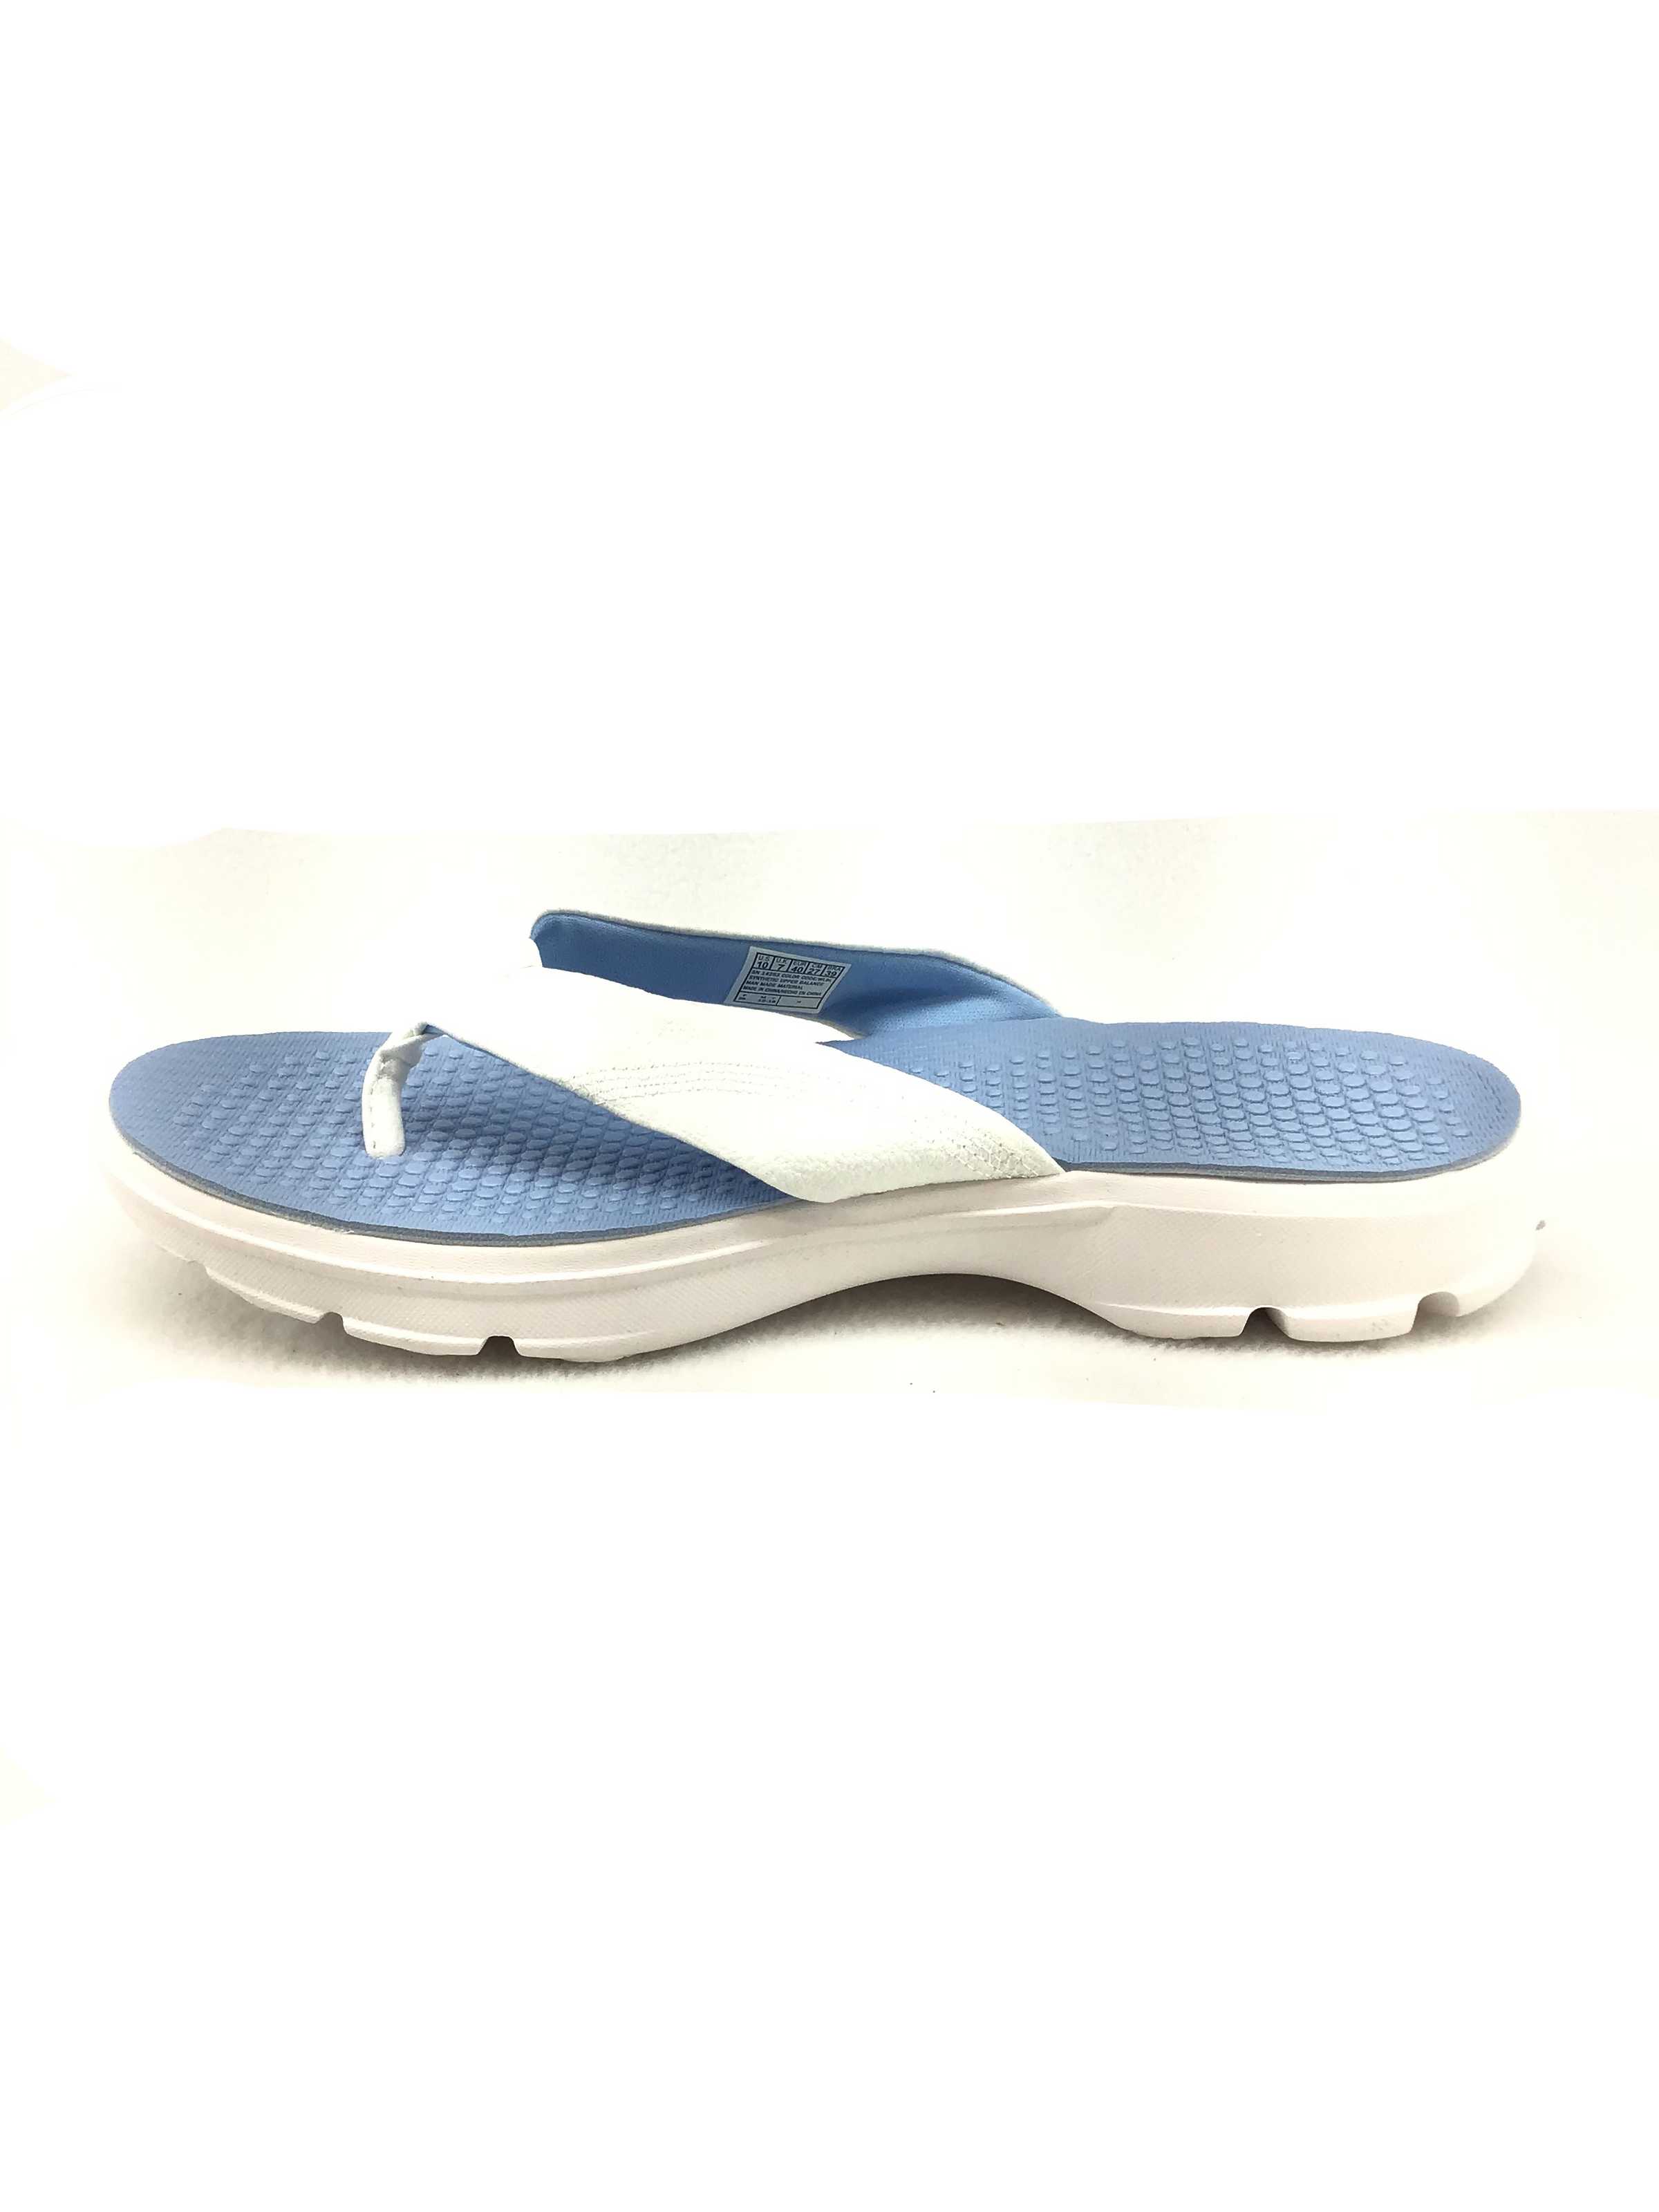 Skechers GoWalk Sandals Size 10